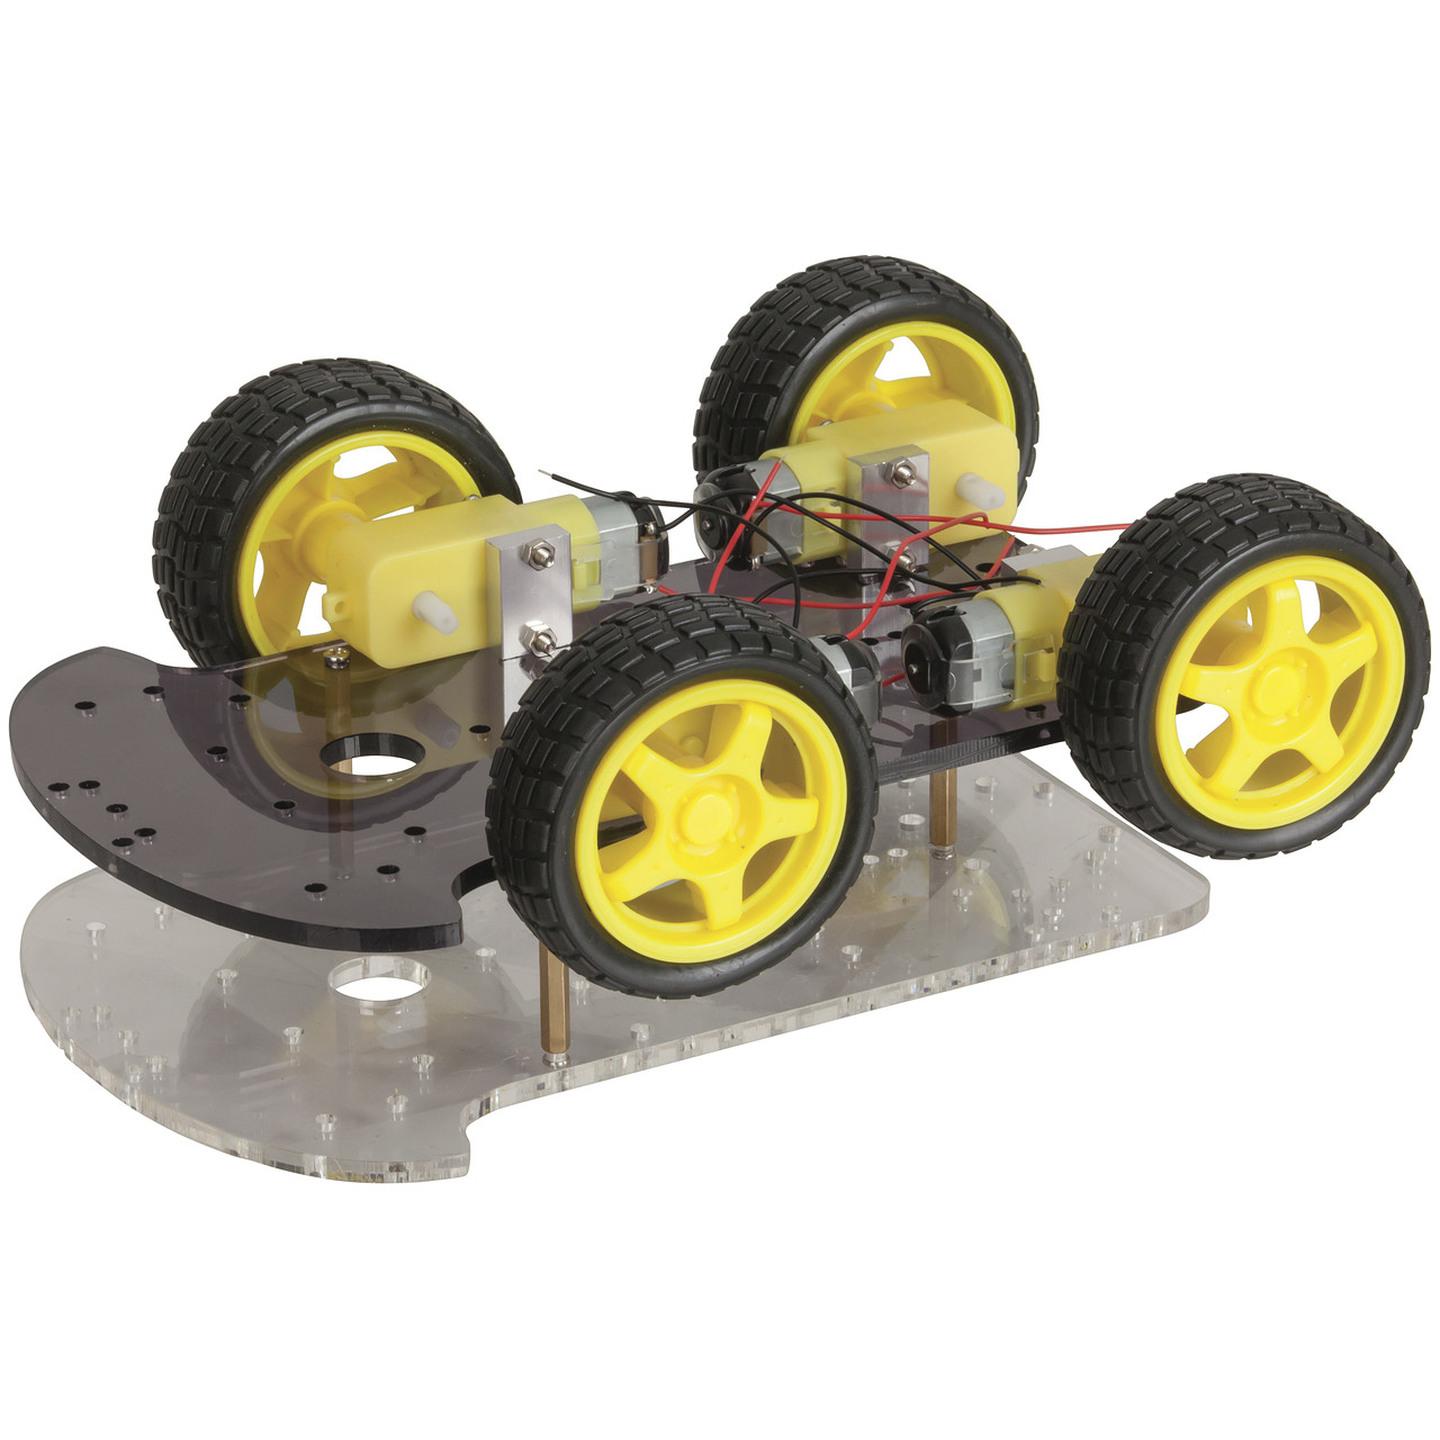 4 Wheel Drive Motor Chassis Robotics Kit